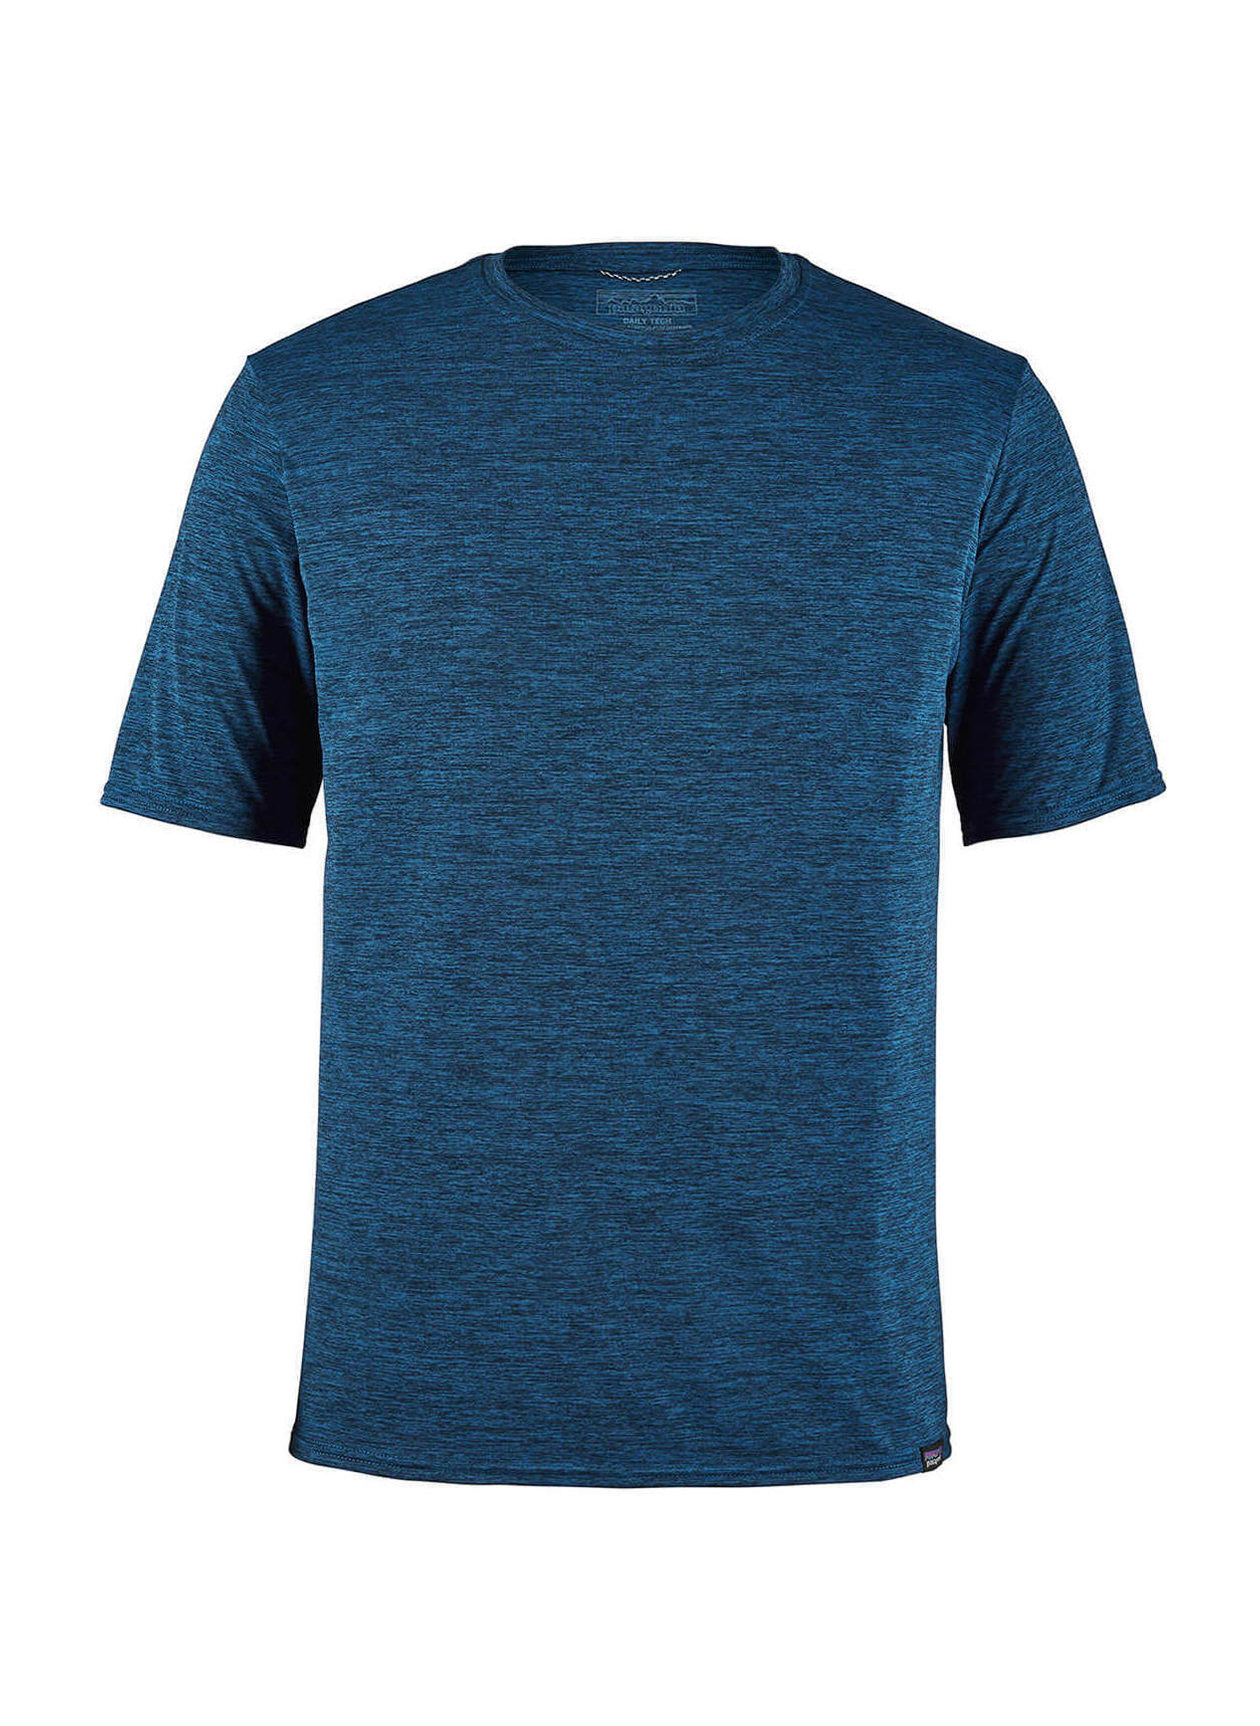 Patagonia Men's Viking Blue / Navy Blue Cap Cool Daily T-Shirt